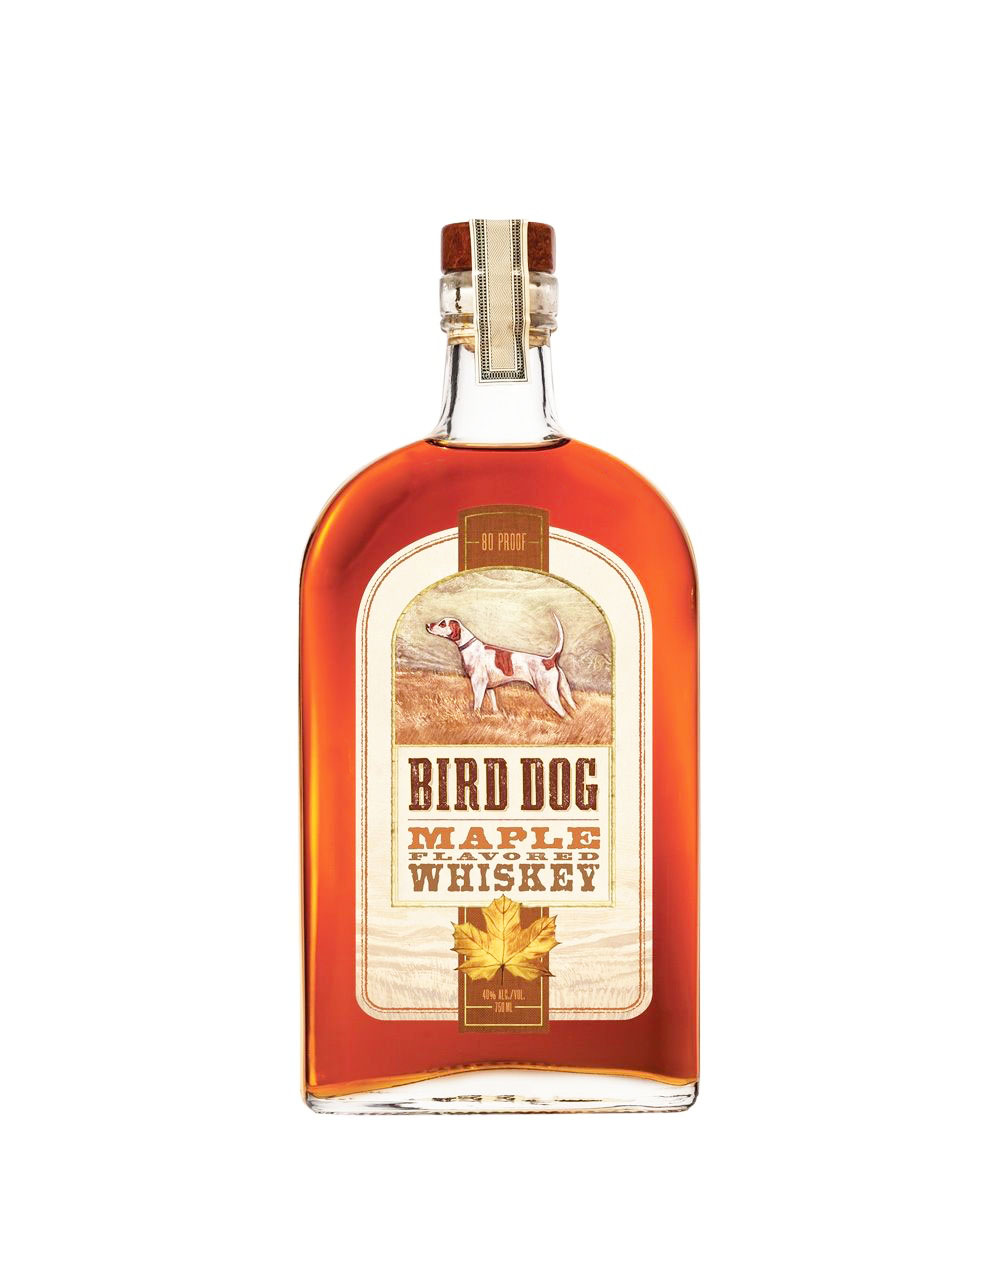 Bird Dog Maple Flavored Whiskey